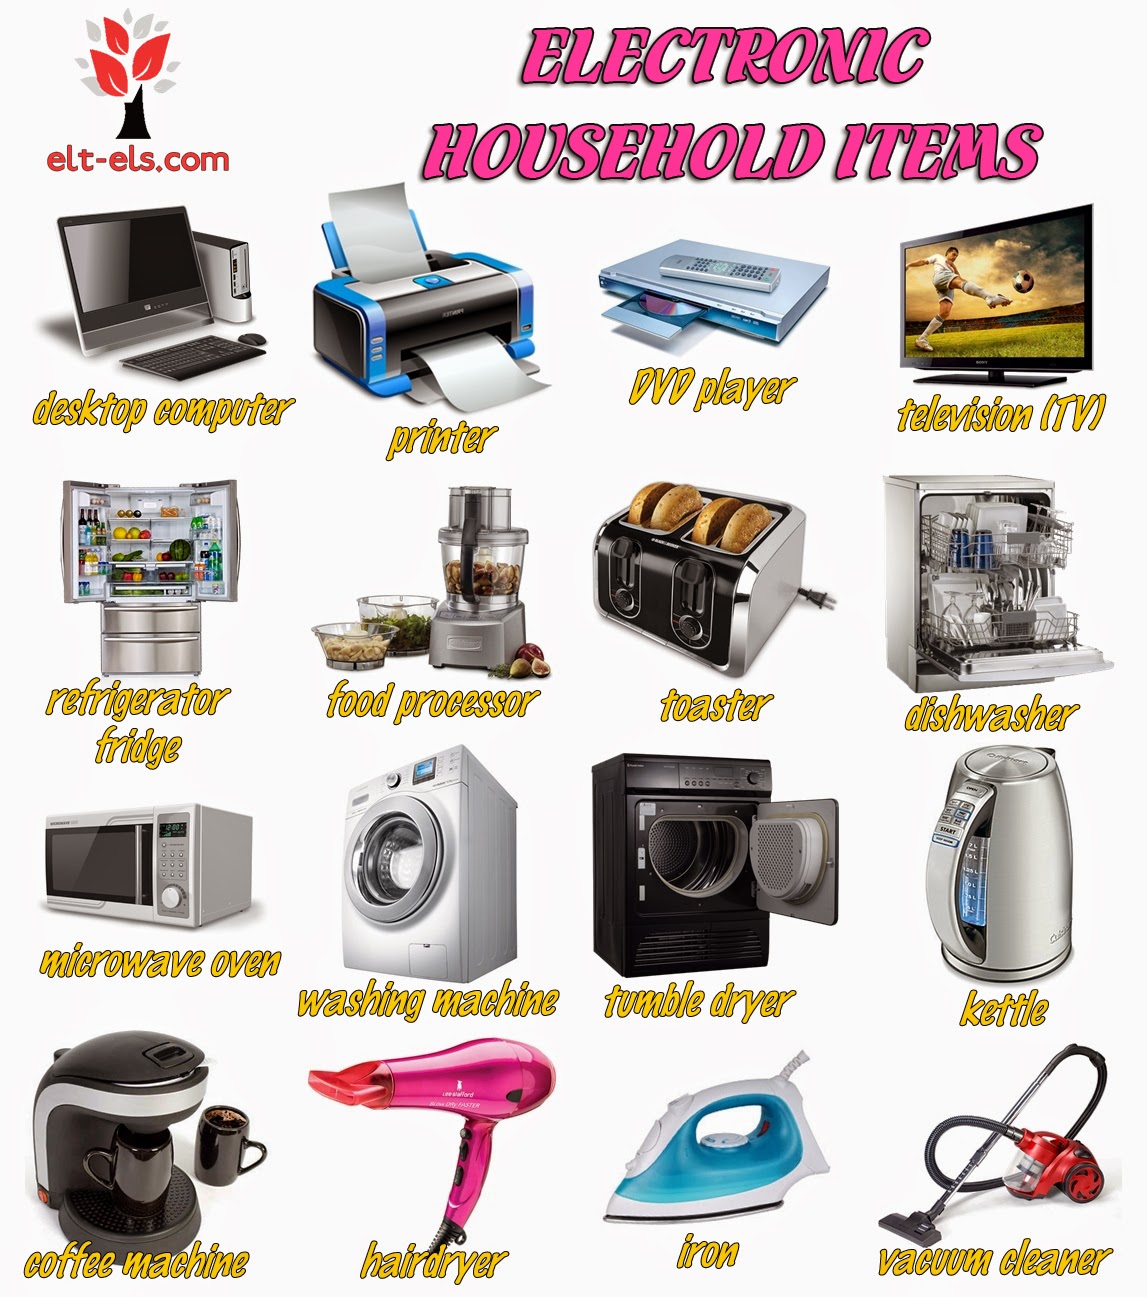 electronic-household-items-www-elt-els